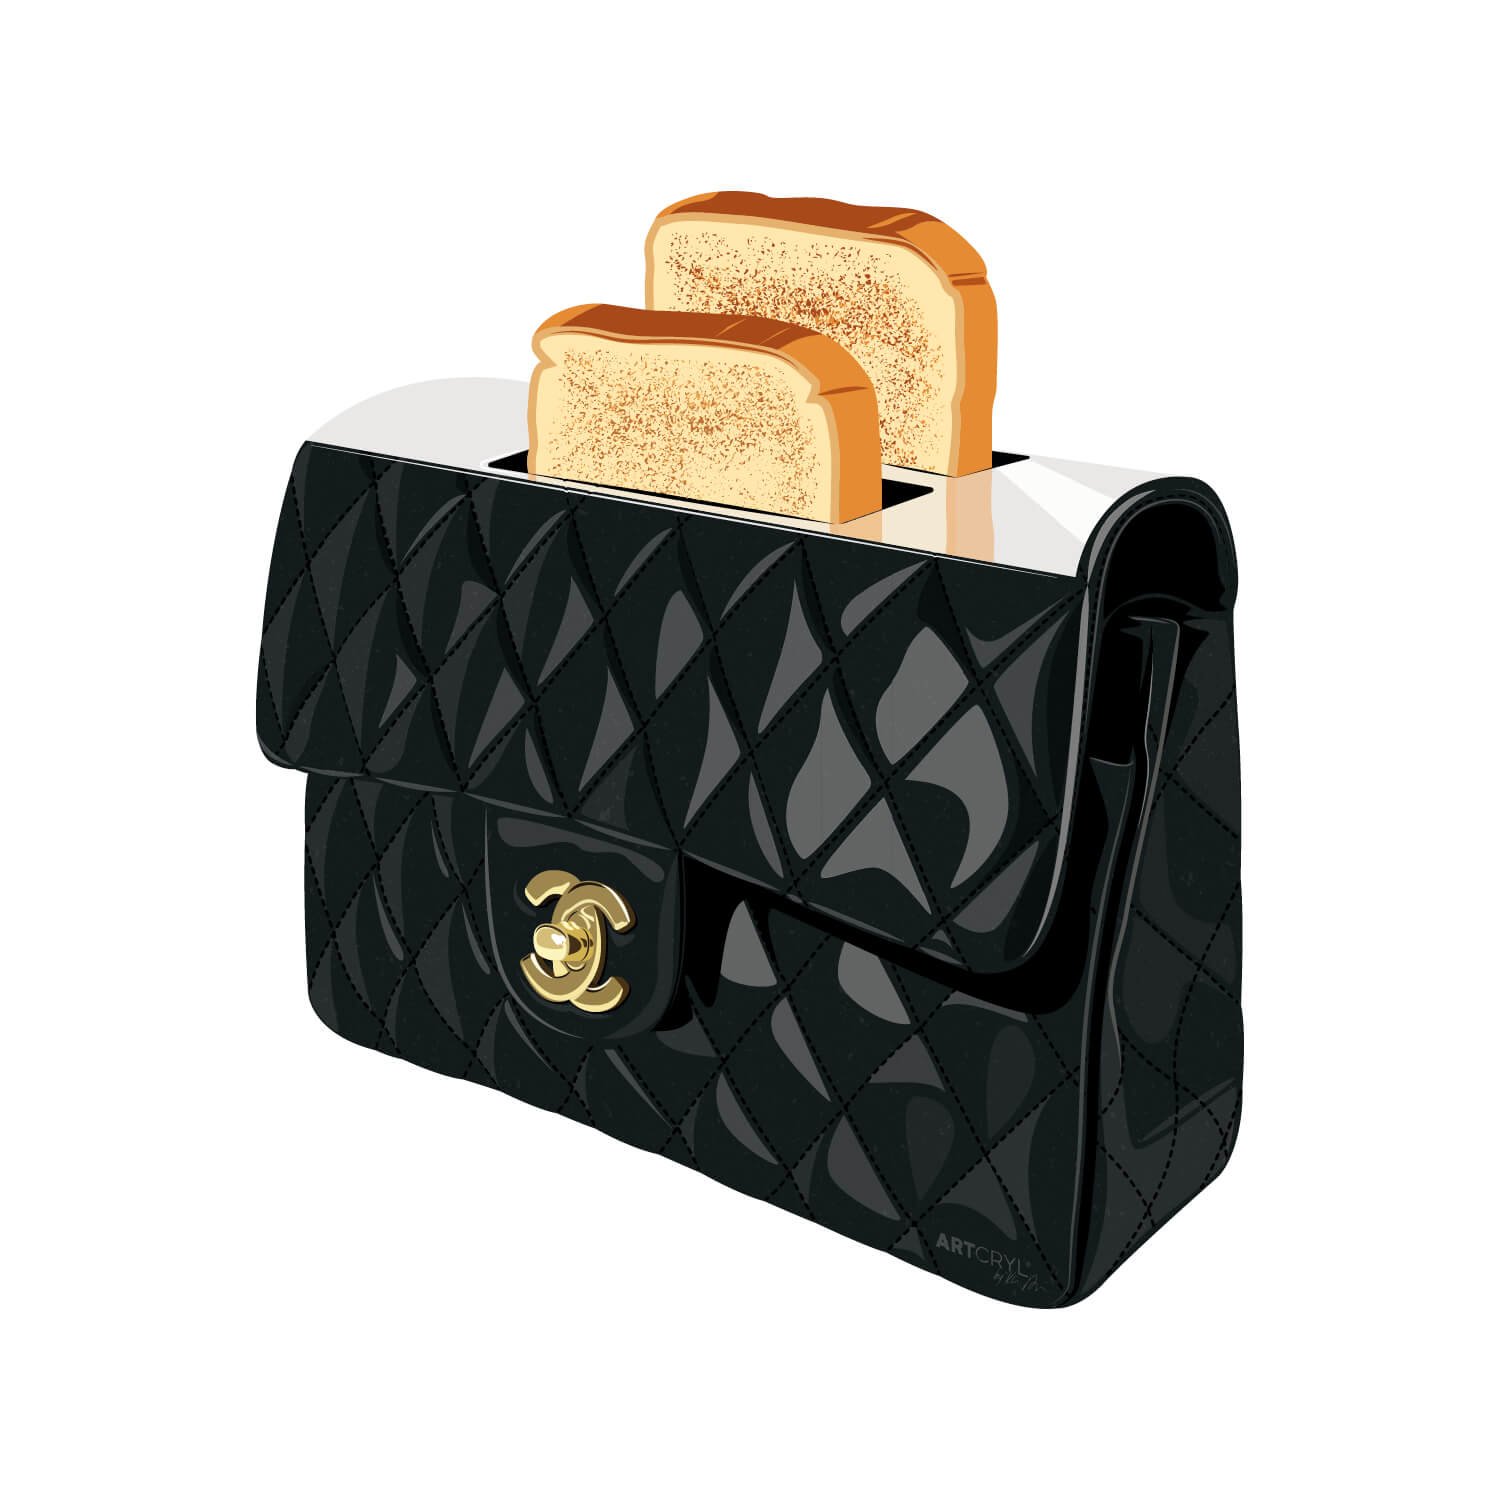 Chanel Toast — Artcryl